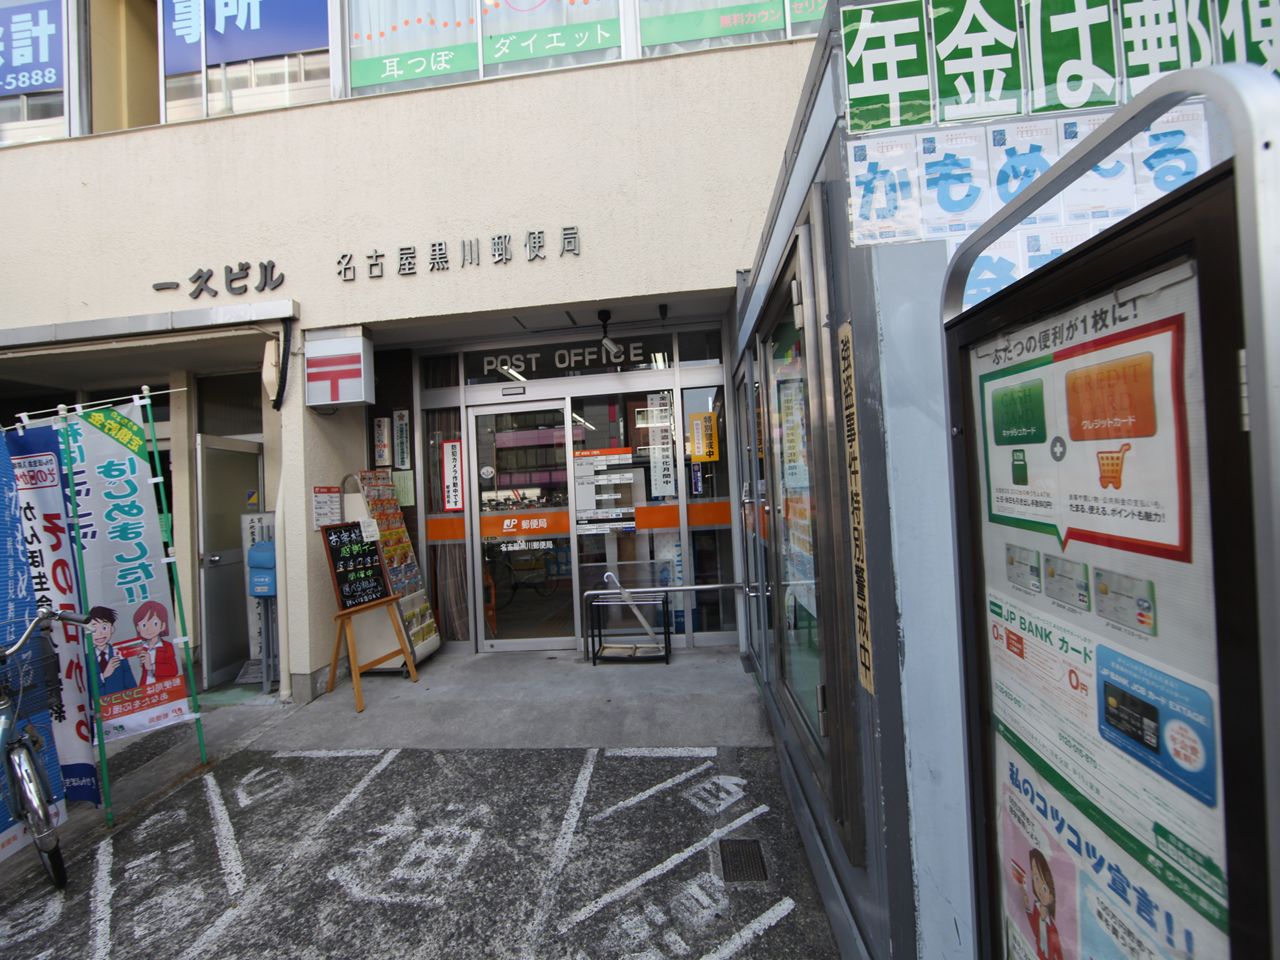 post office. 472m to Nagoya Kurokawa post office (post office)